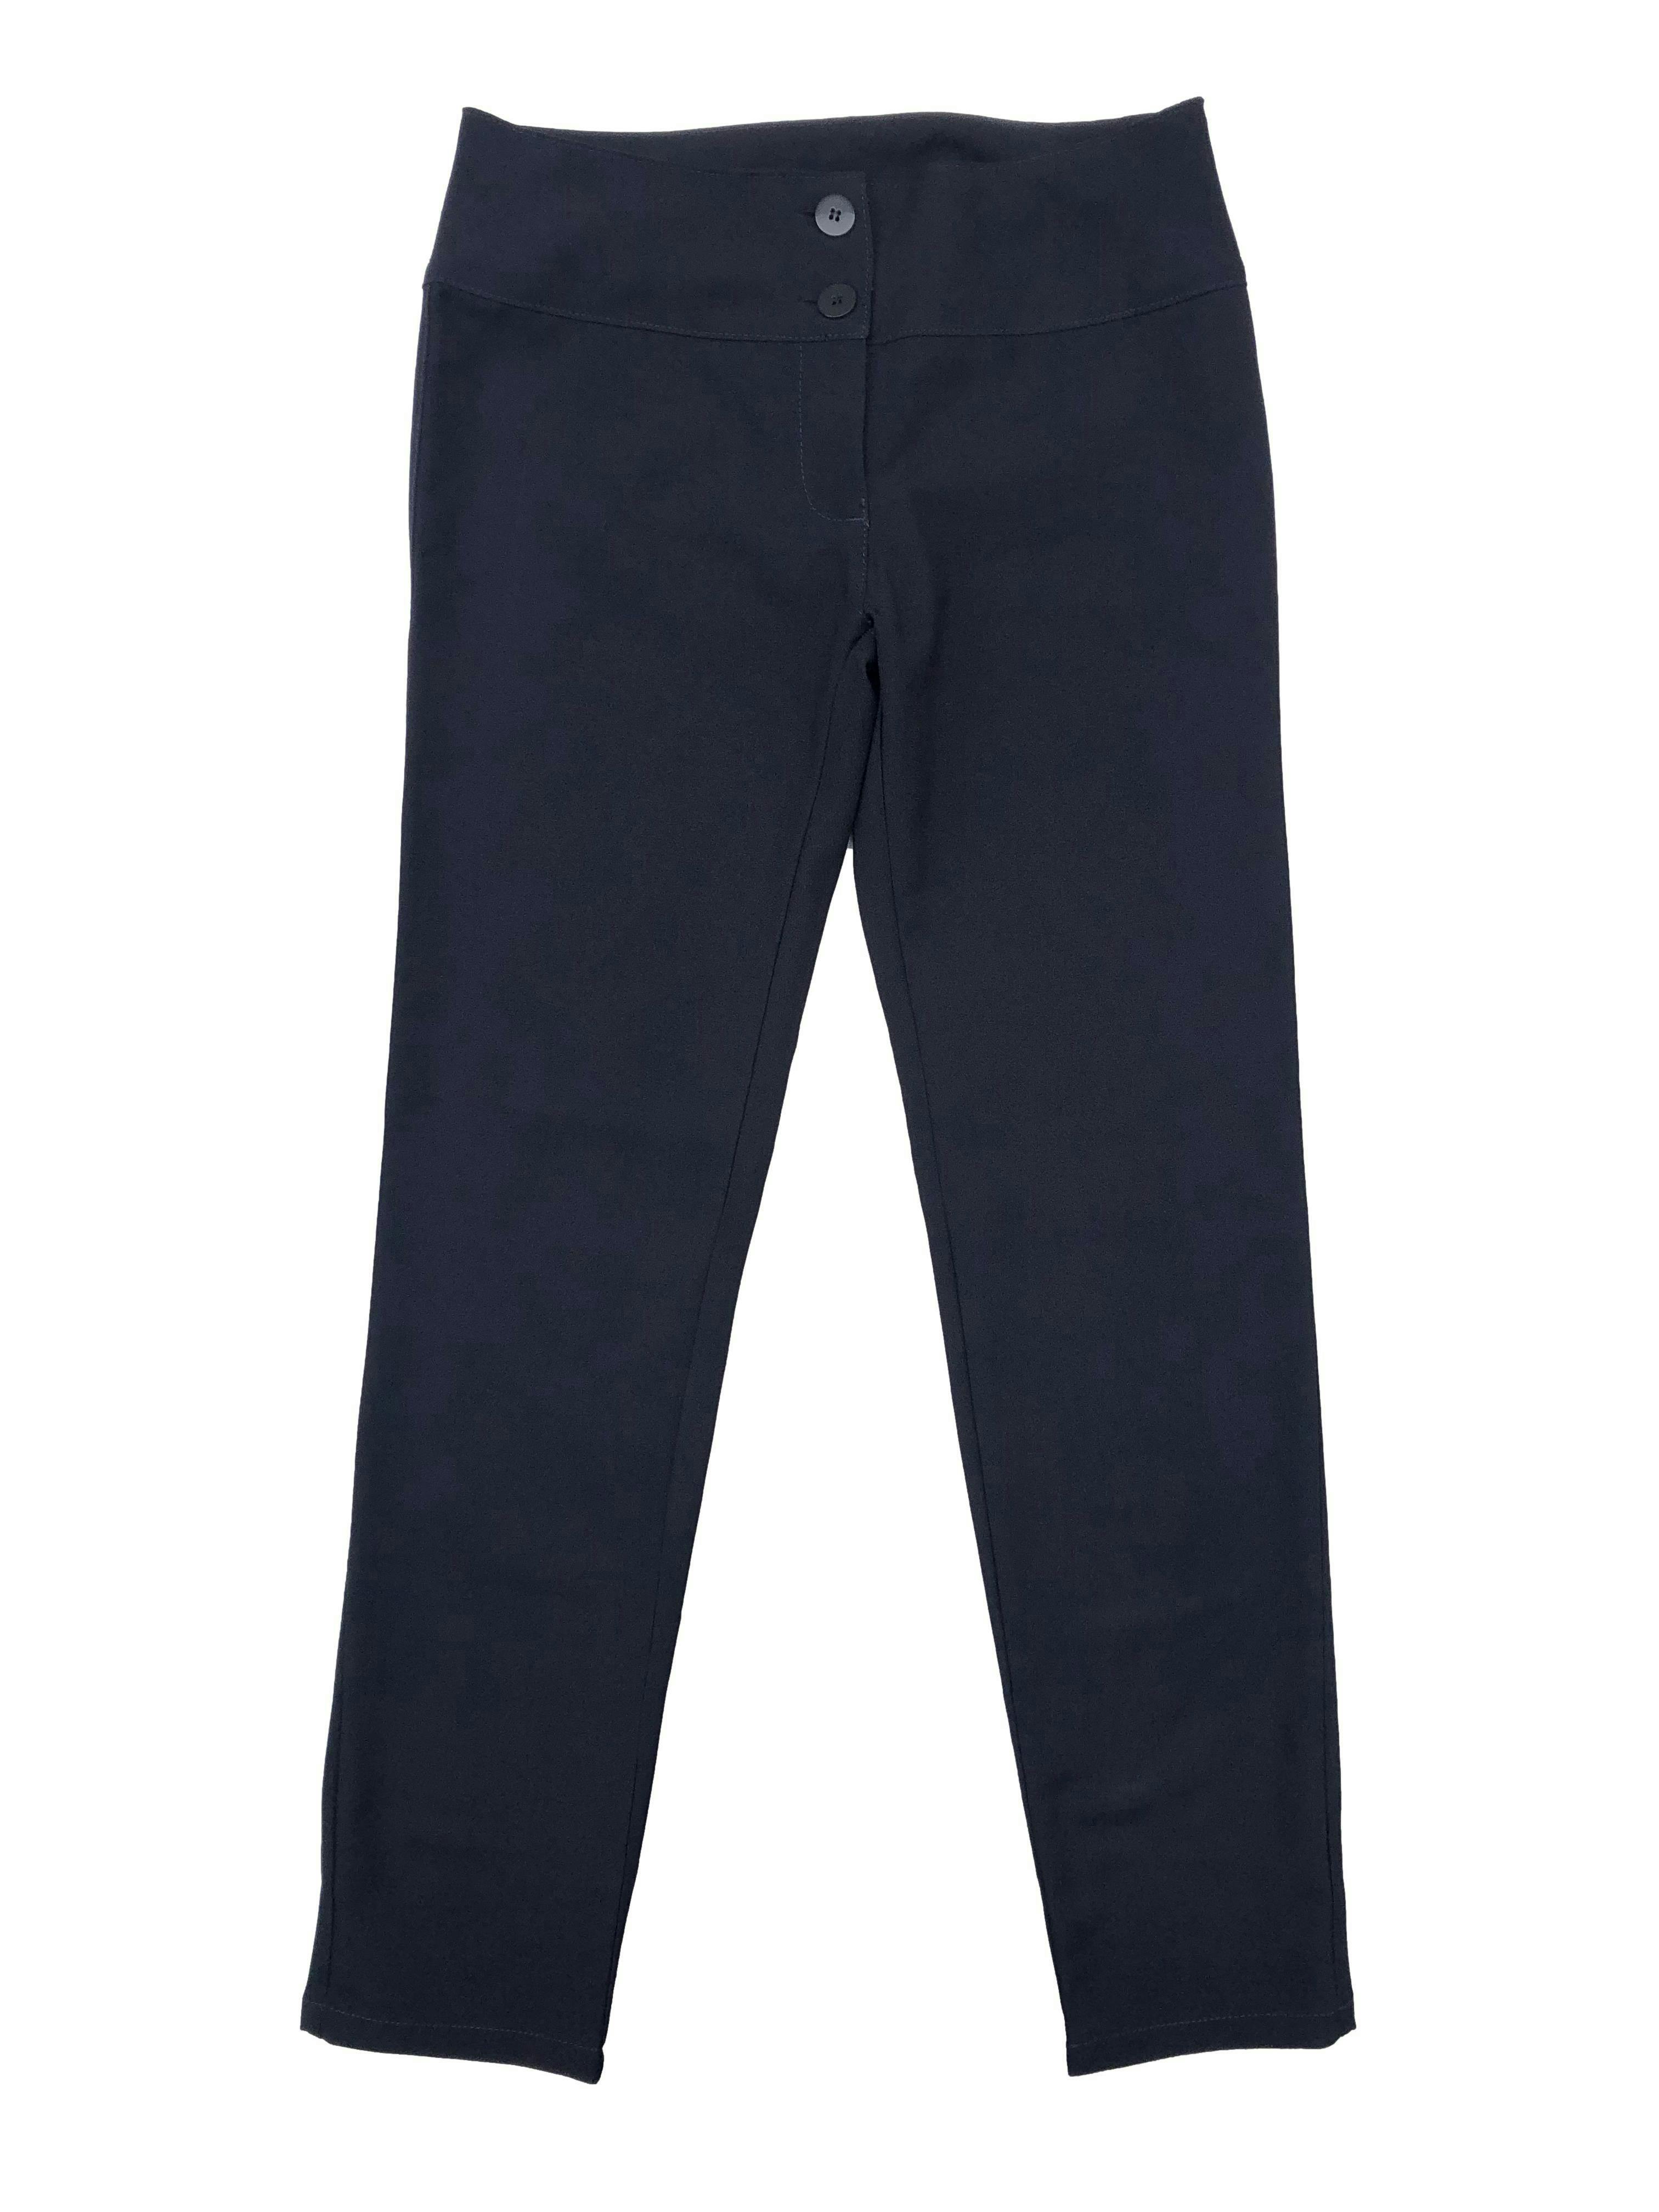 Pantalón azul noche Pierre Cardin, tela plana, corte slim con pretina ancha. Cintura 76cm, Largo 100cm. Tiro 25cm